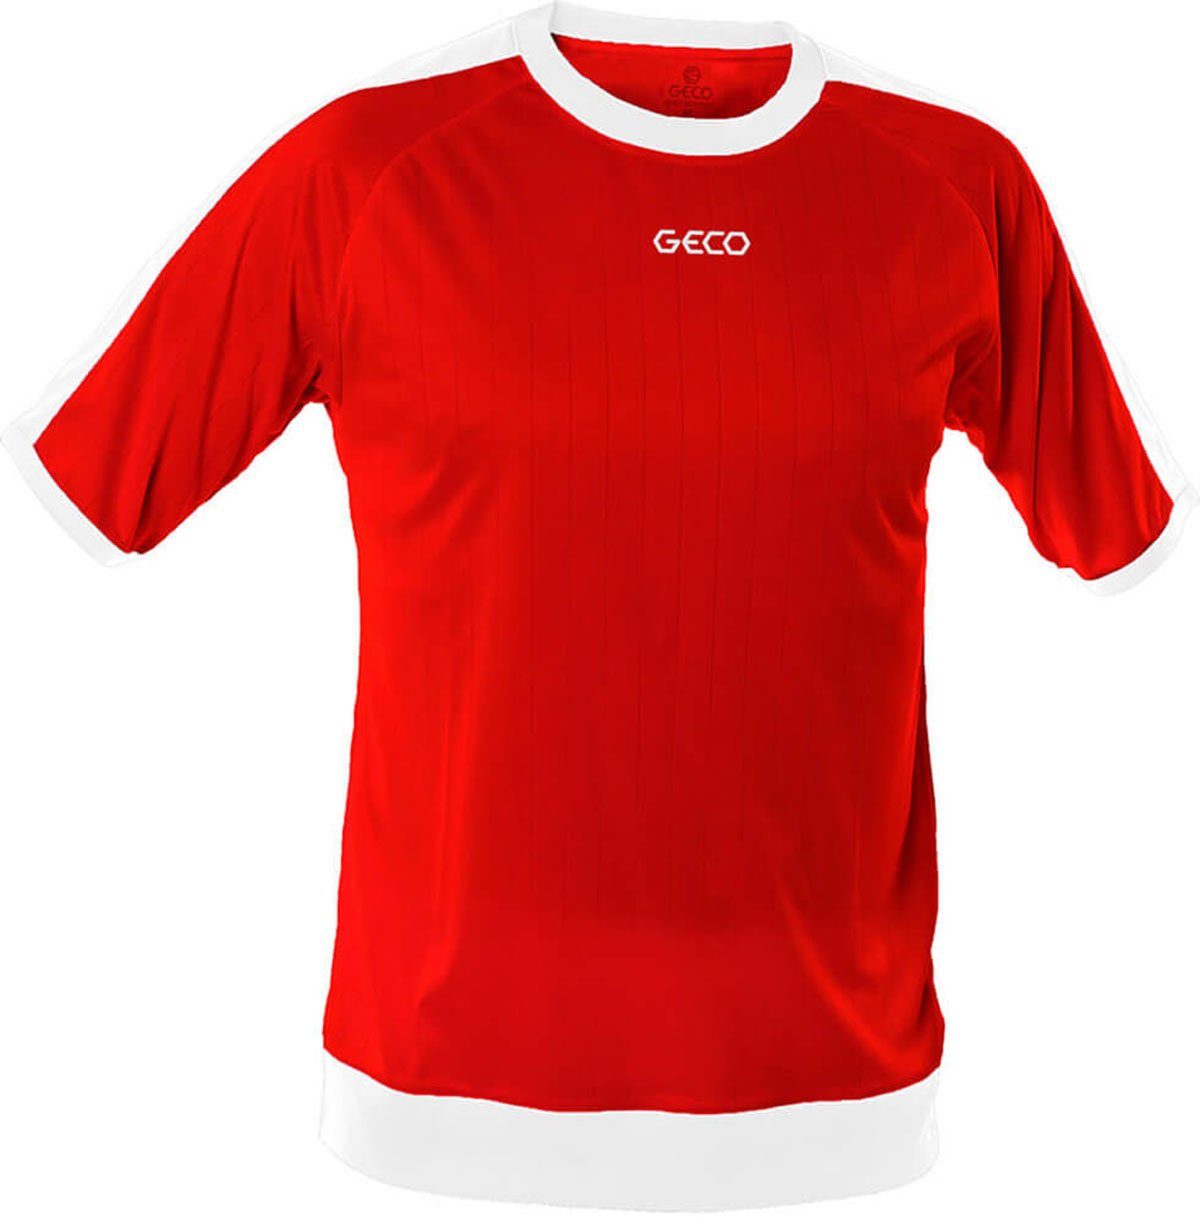 Geco Trikot zweifarbig kurzarm rot/weiß NOTOS Geco Fußballtrikot Fußball Sportswear